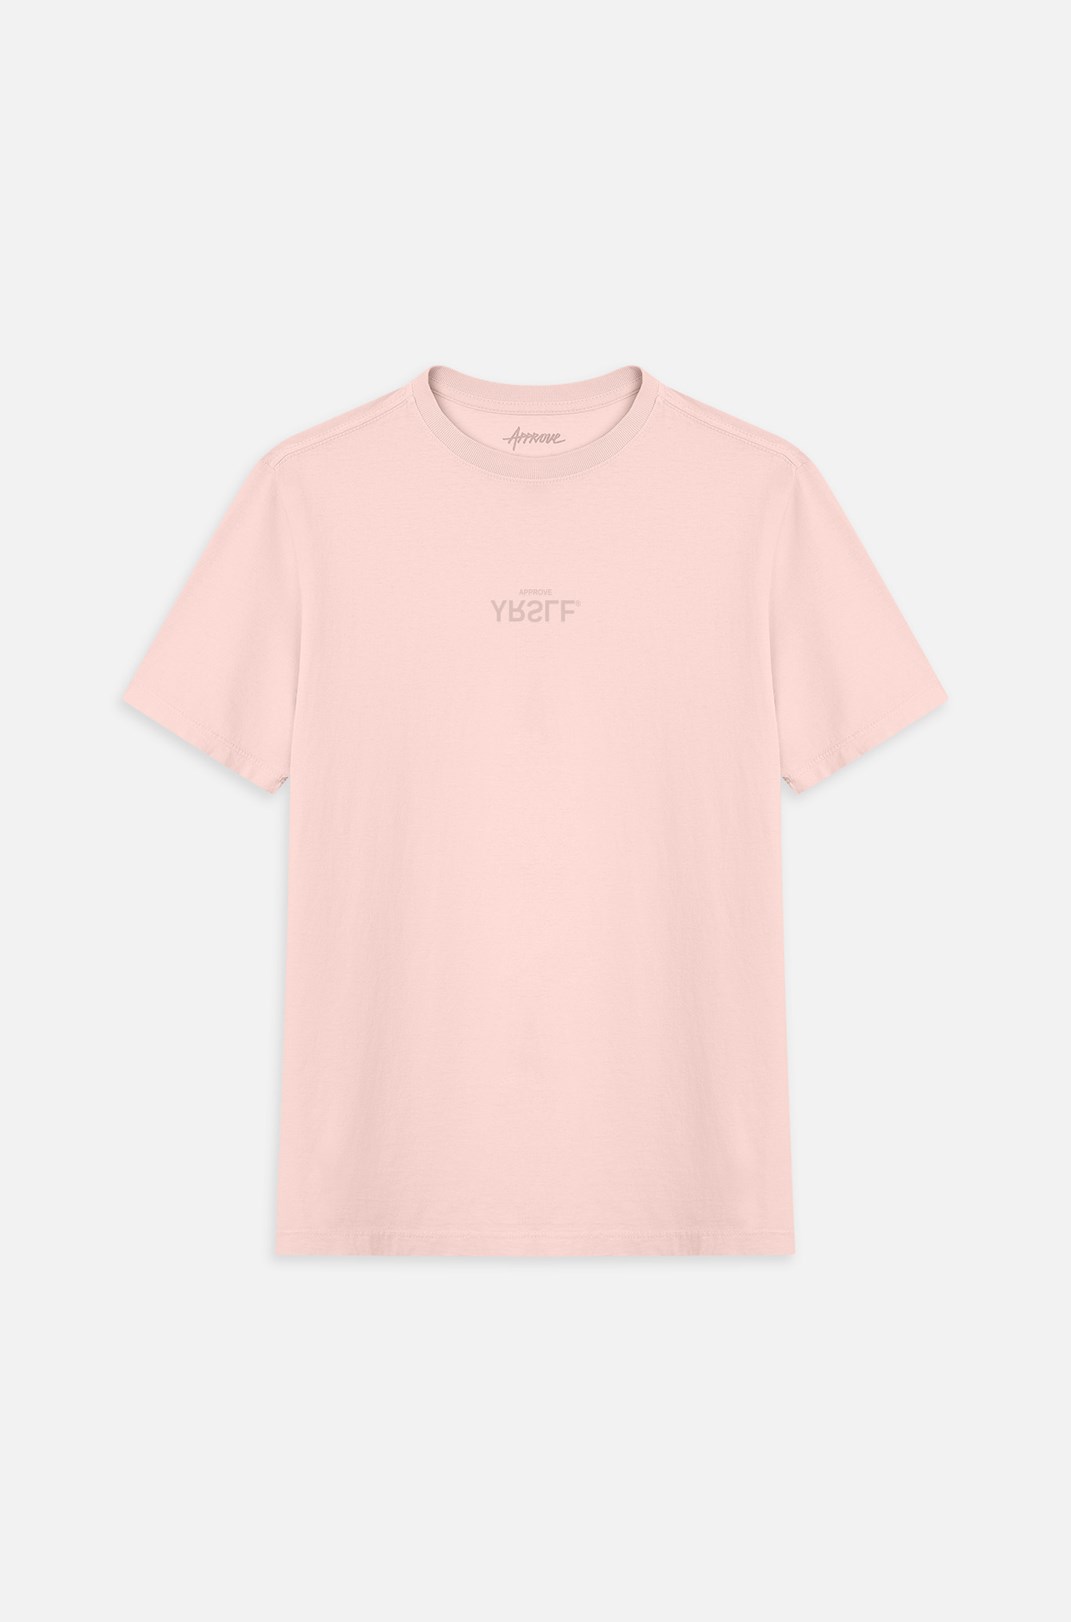 Camiseta Bold Approve Yslf Inverse Collors Rosa Claro